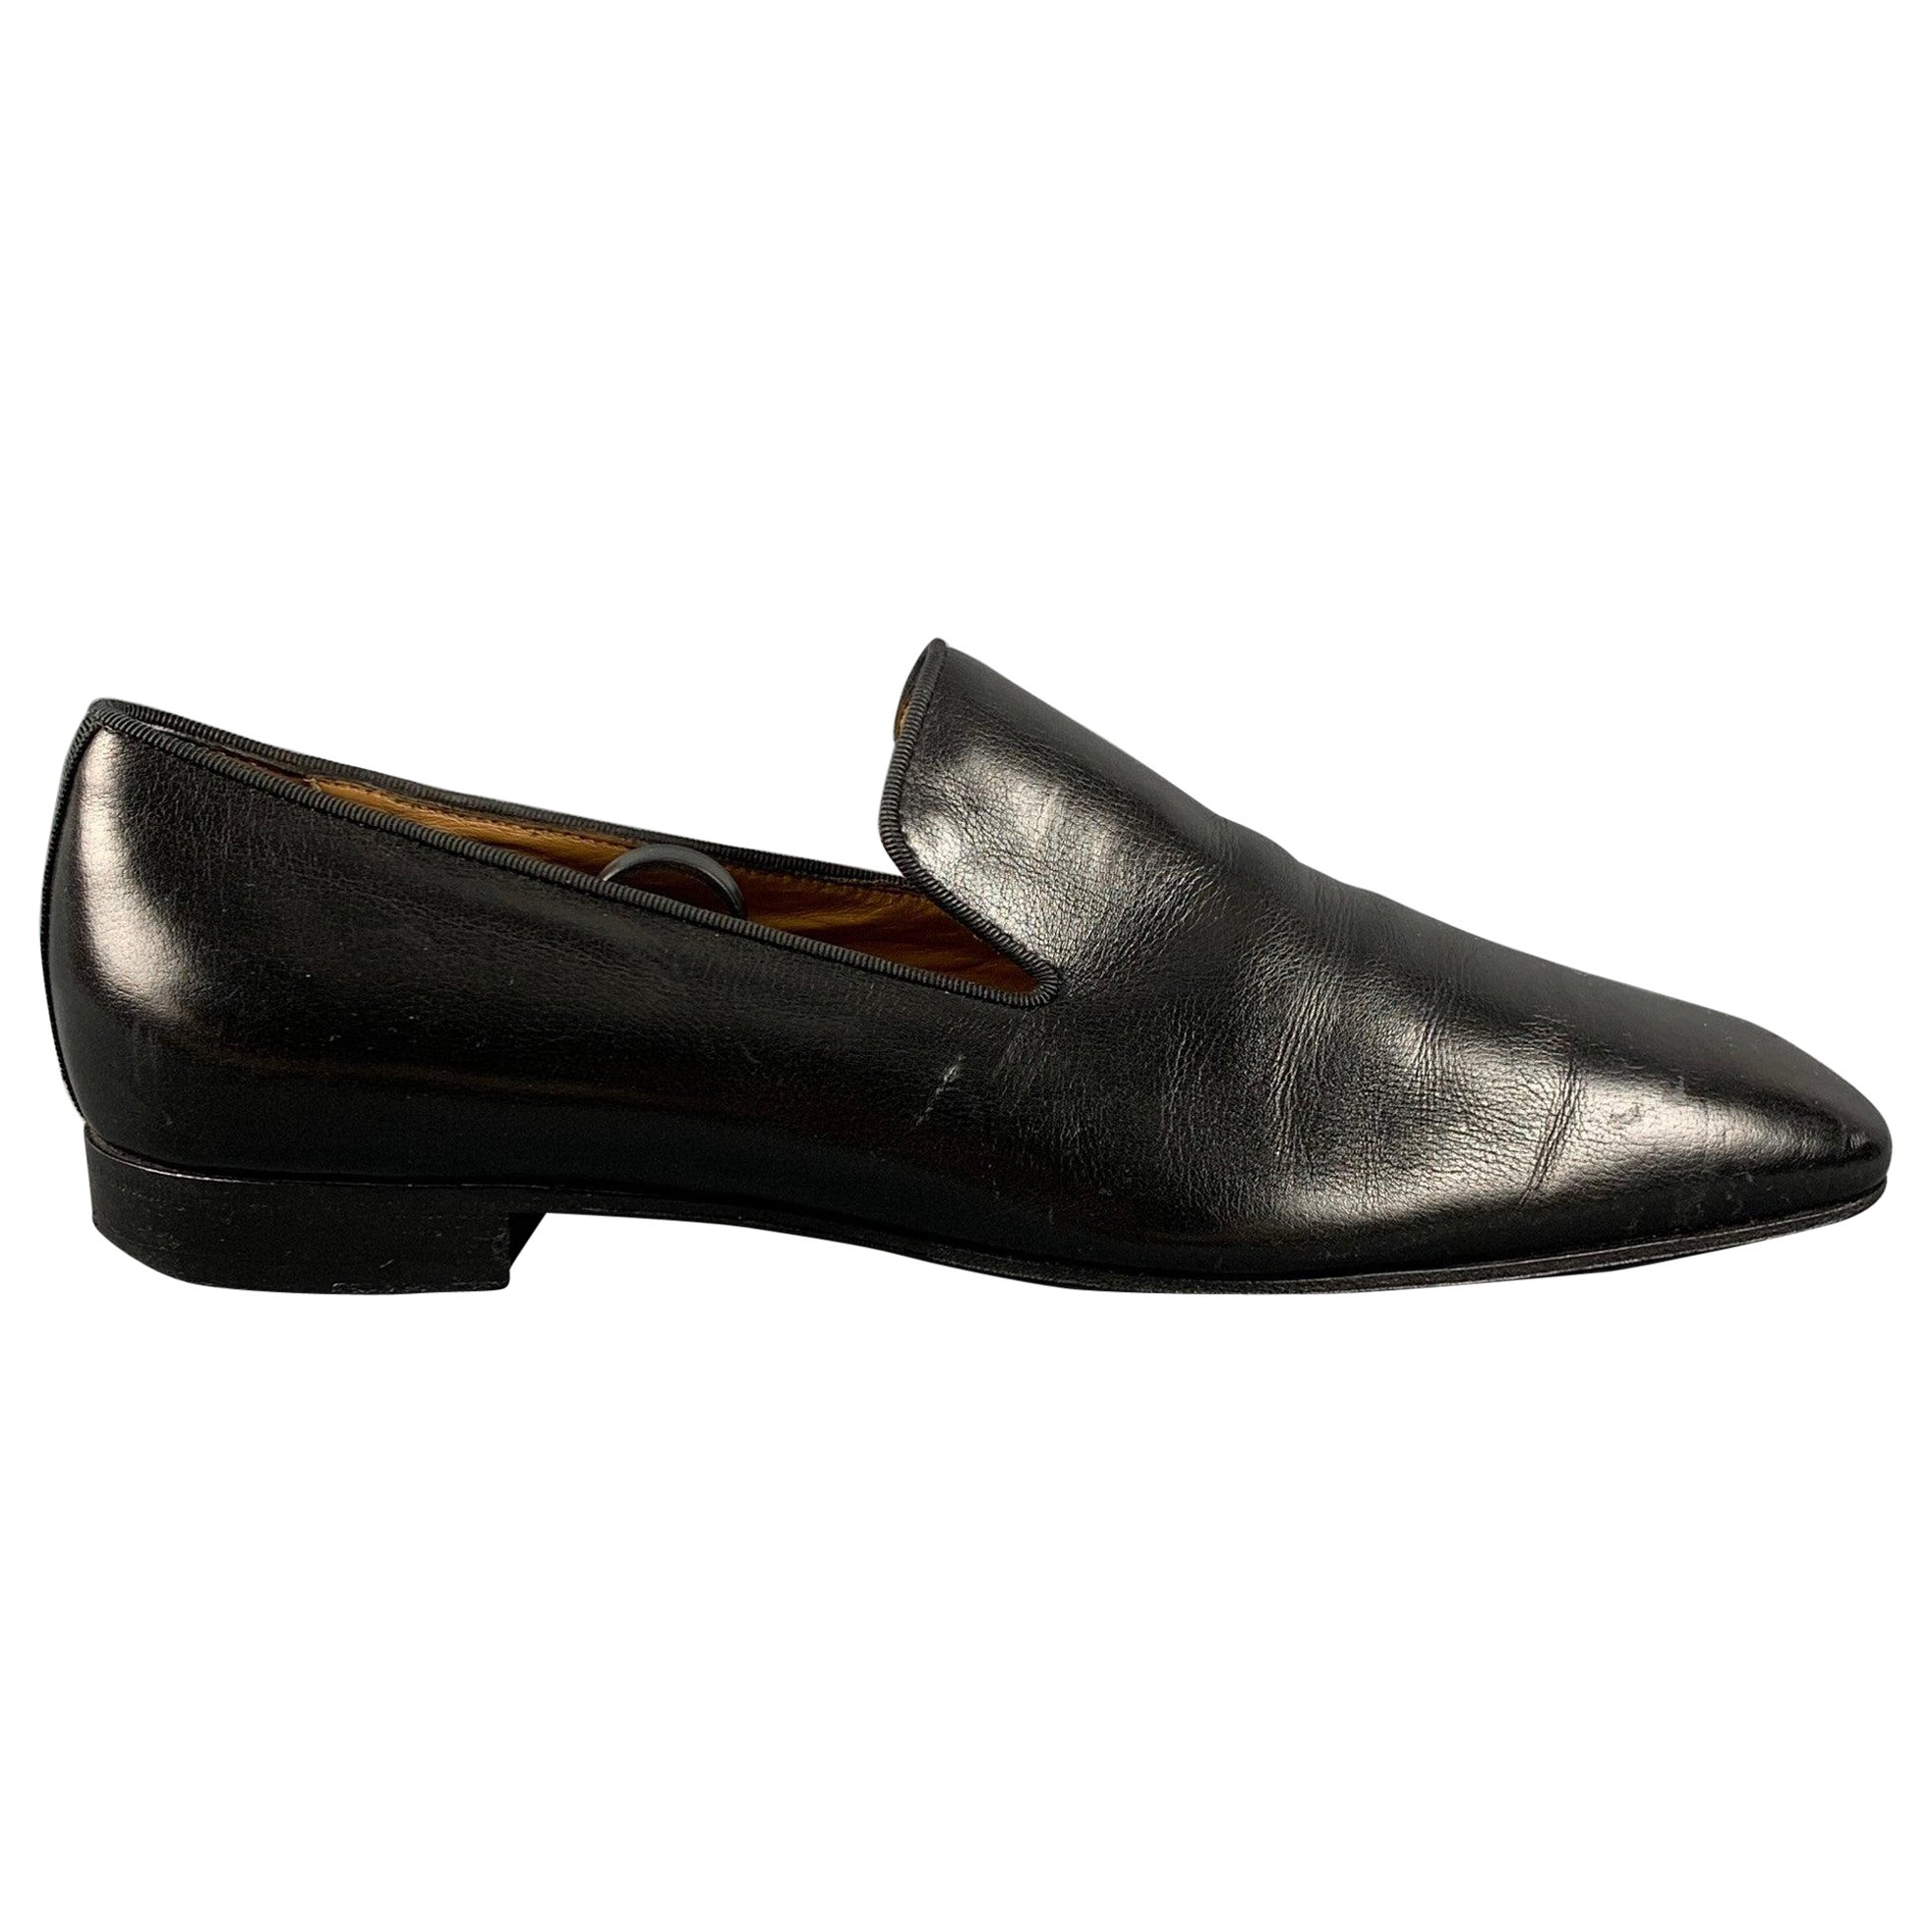 PAUL STUART Size 9.5 Black Leather Loafers For Sale